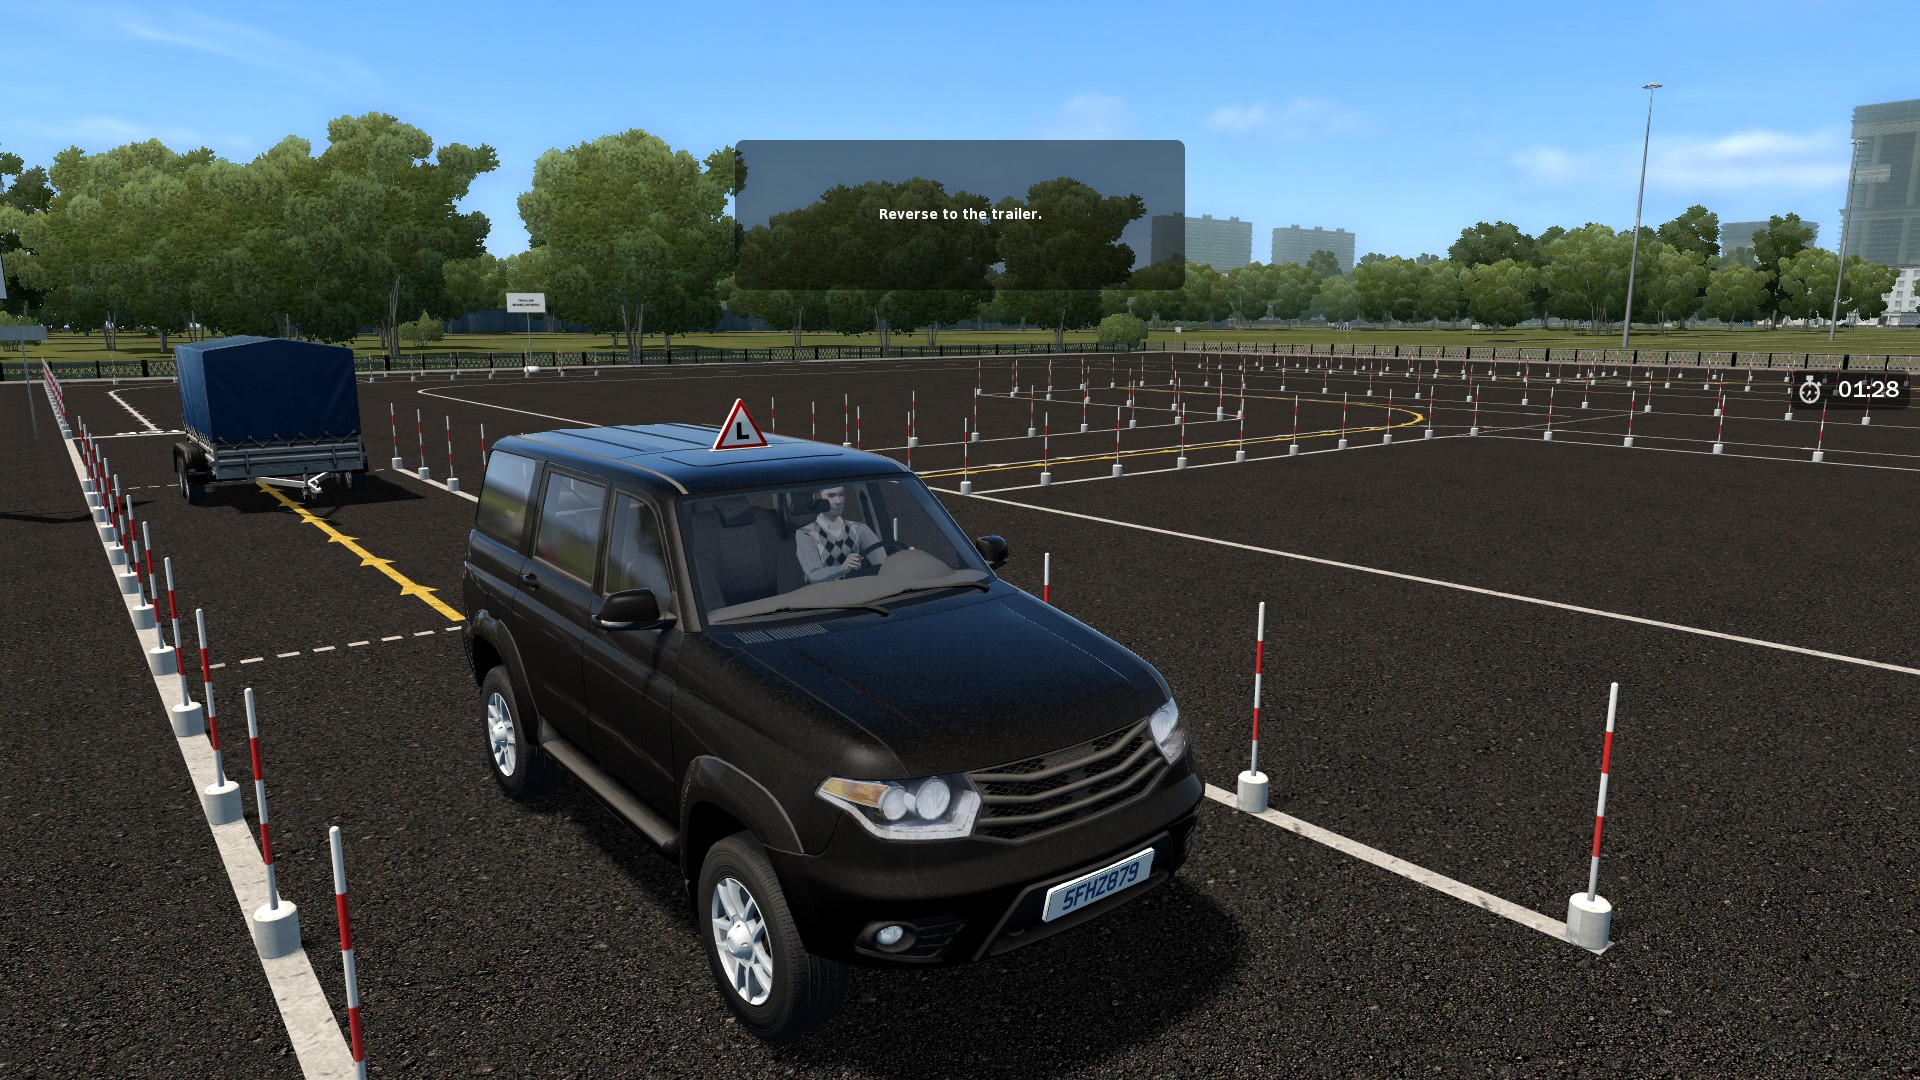 Realistic Car Simulator! - Roblox